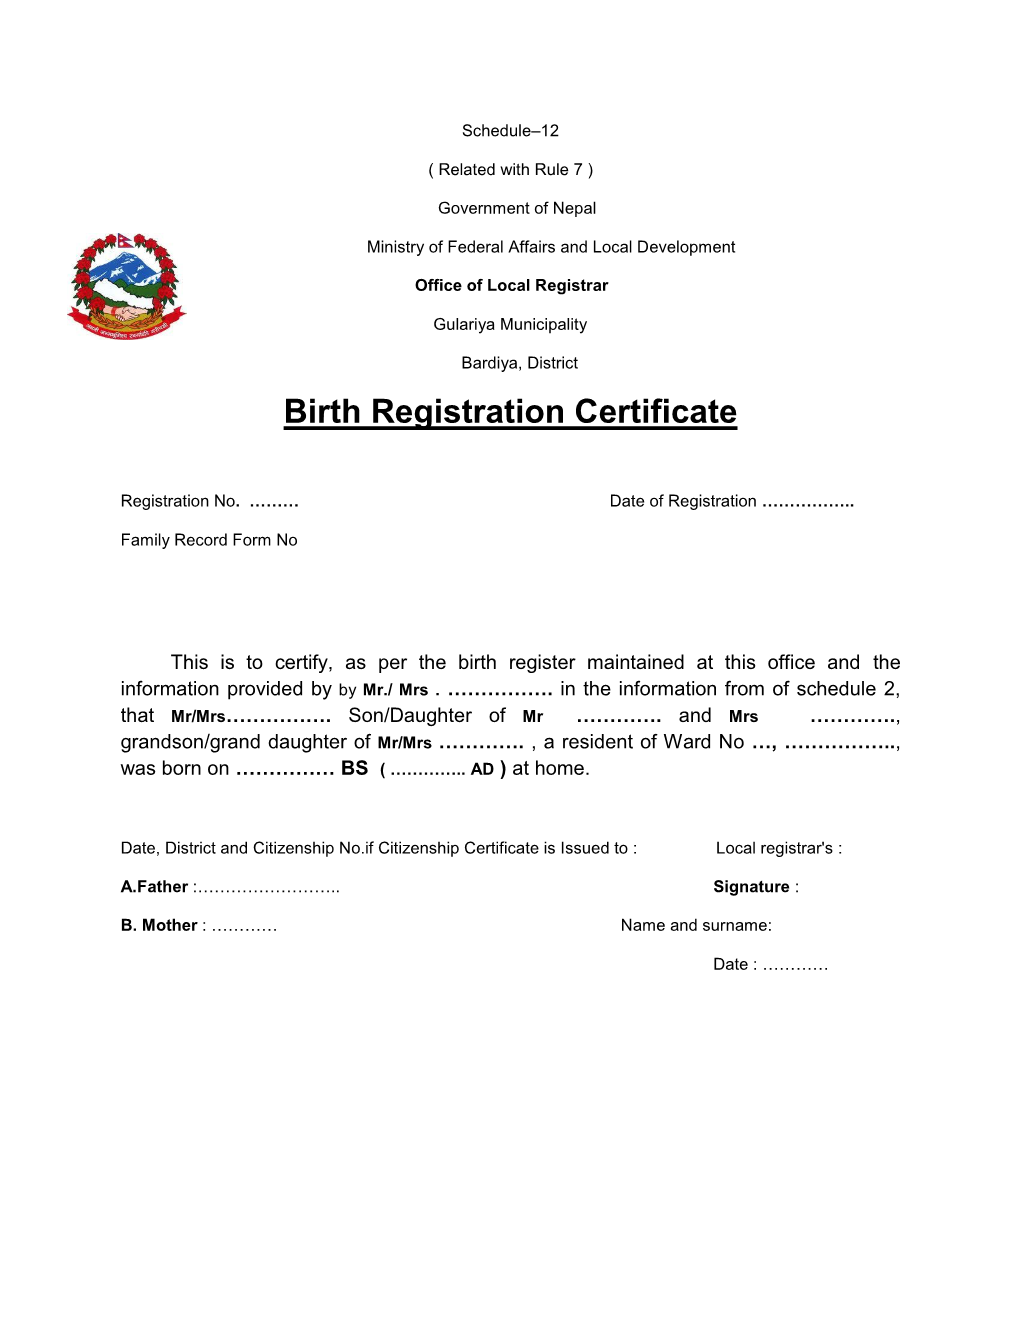 Birth Registration Certificate